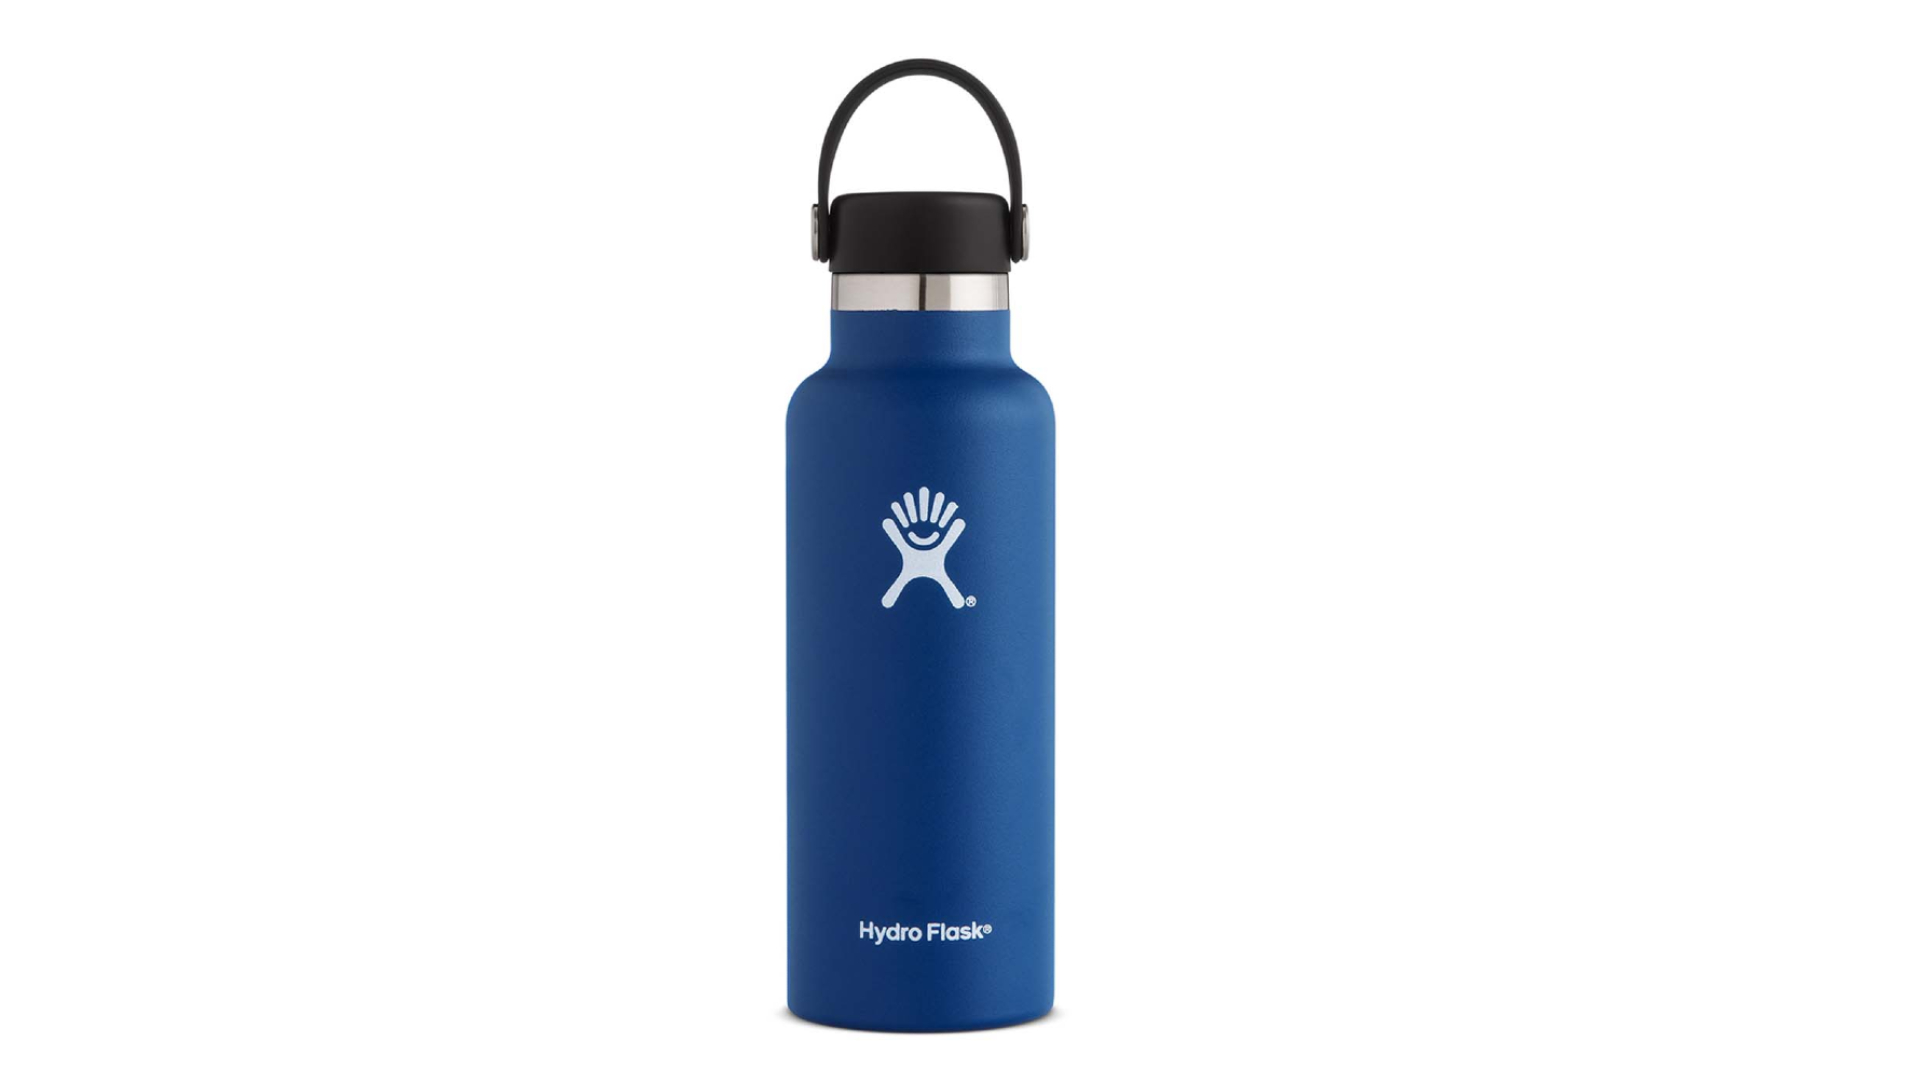 Best water bottles: Image of HudroFlask water bottle